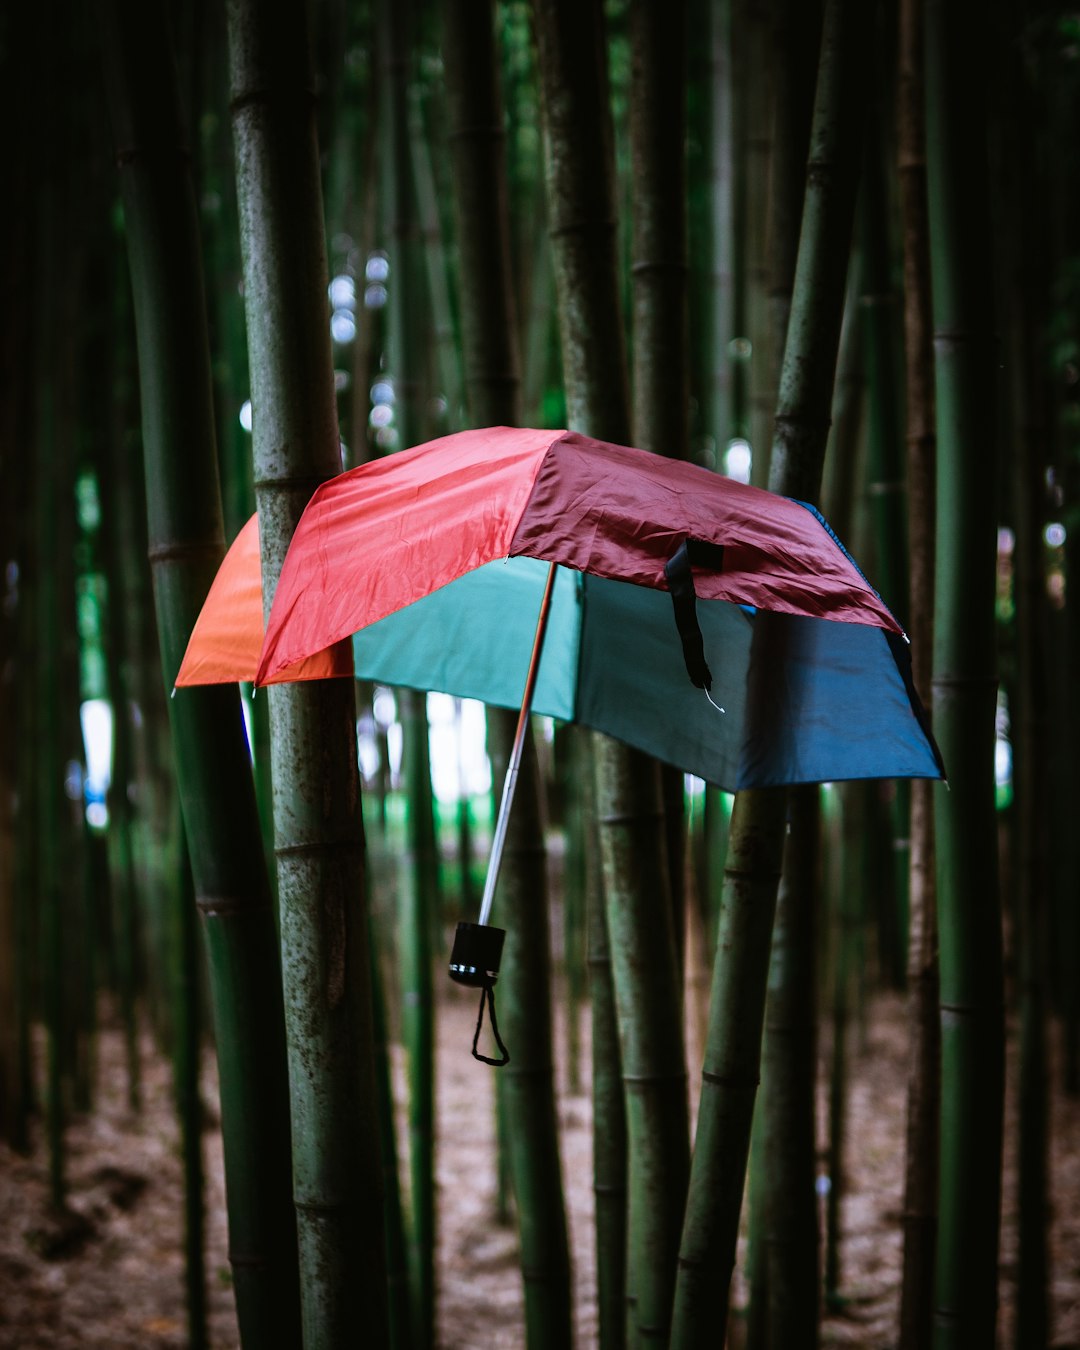 umbrella stocked on bamboo plants